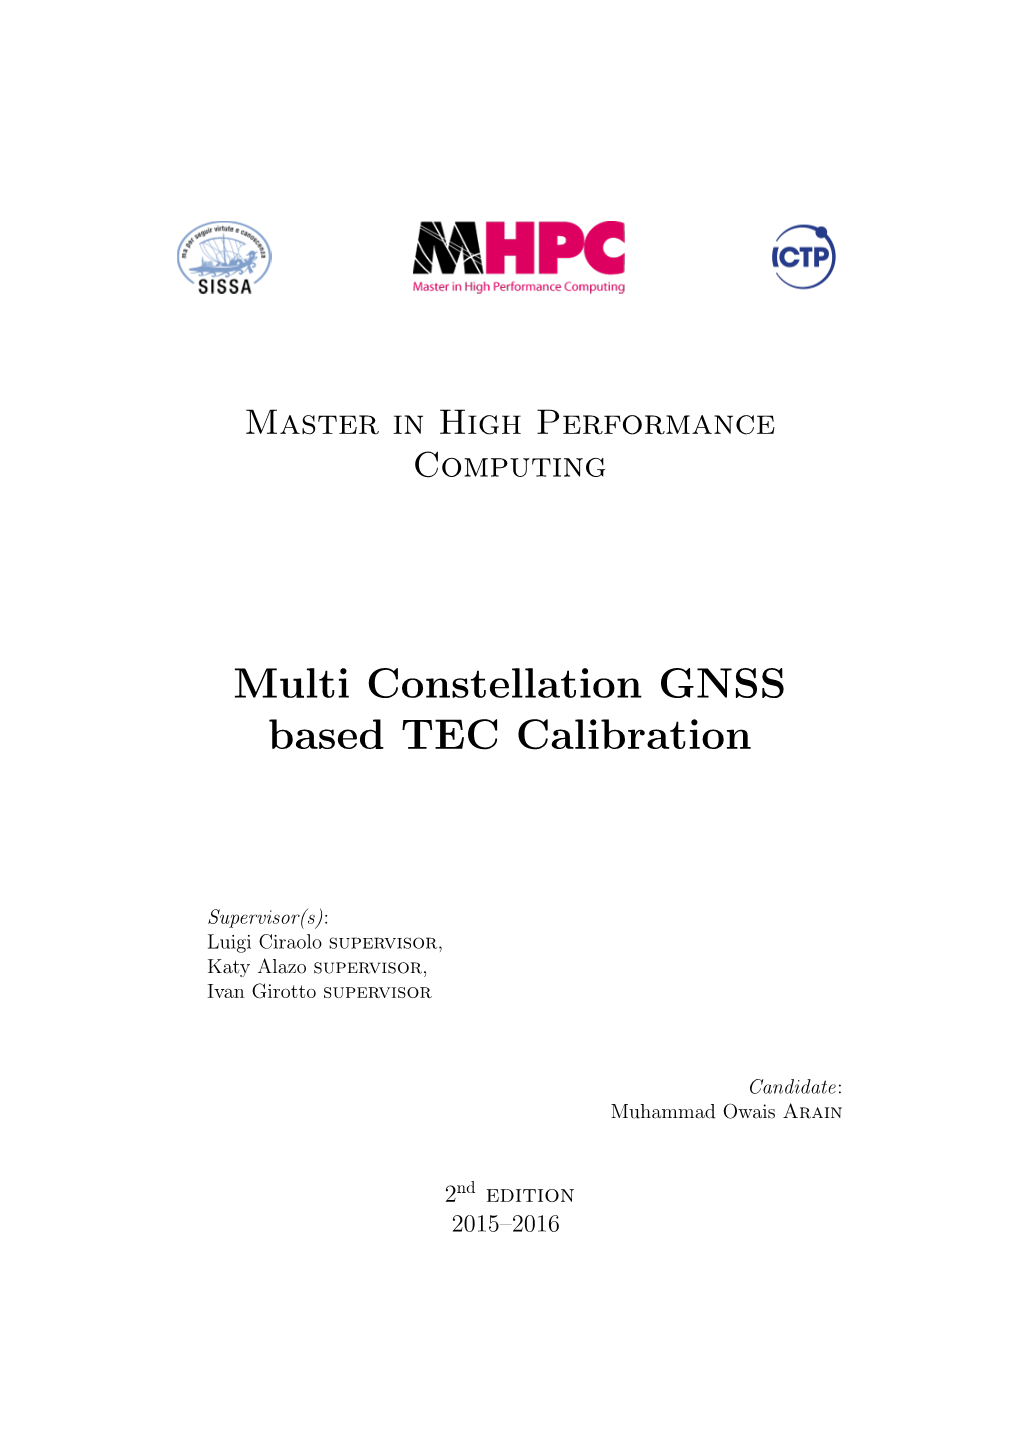 Multi Constellation GNSS Based TEC Calibration